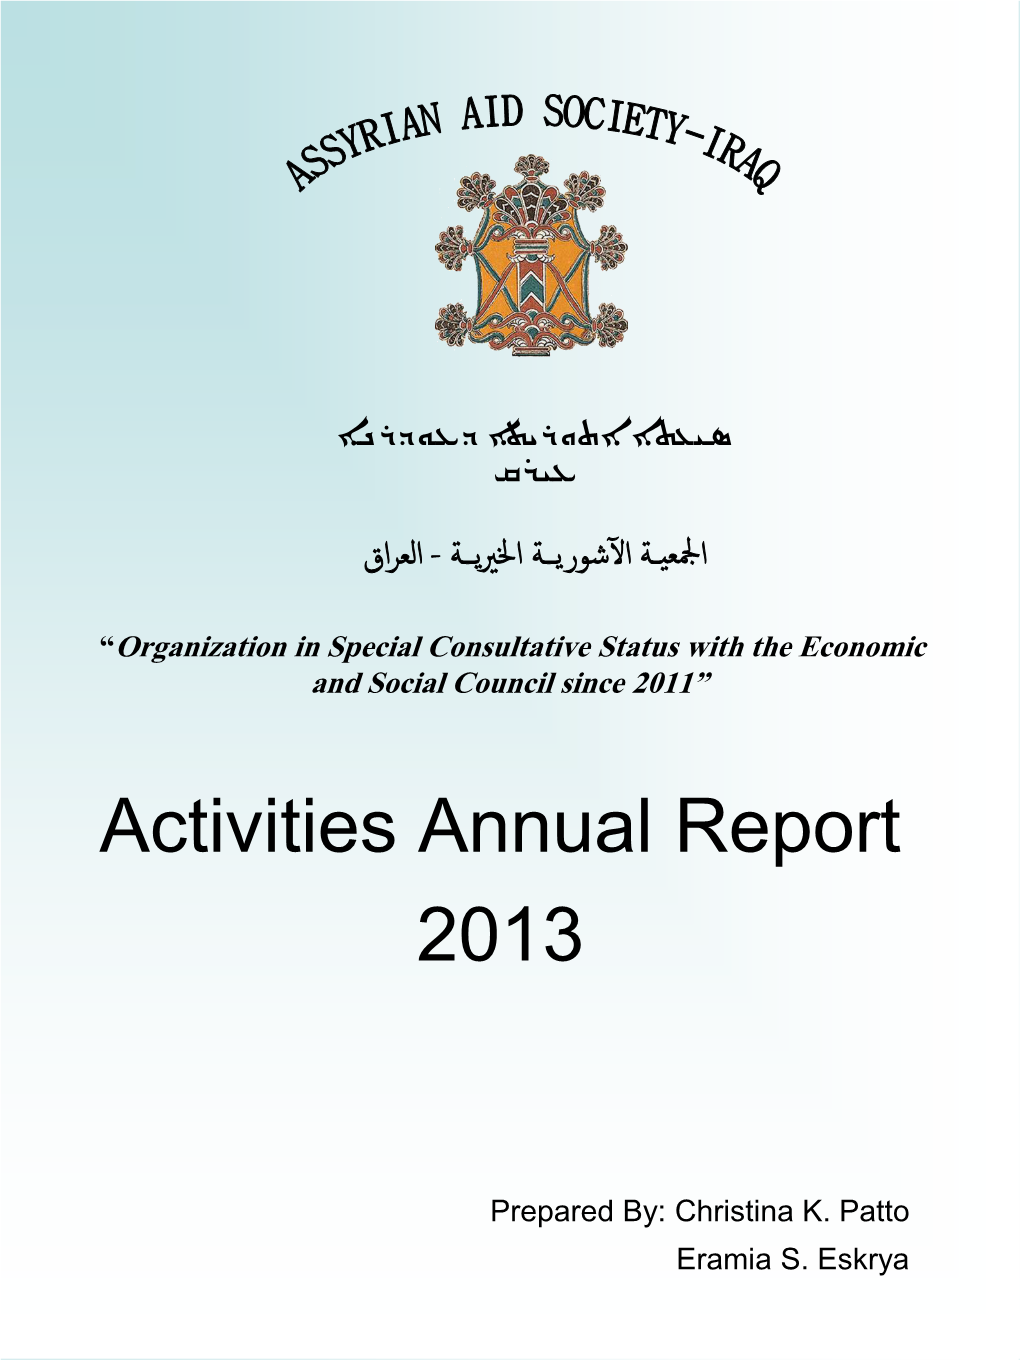 AASI Report 2013.Pdf